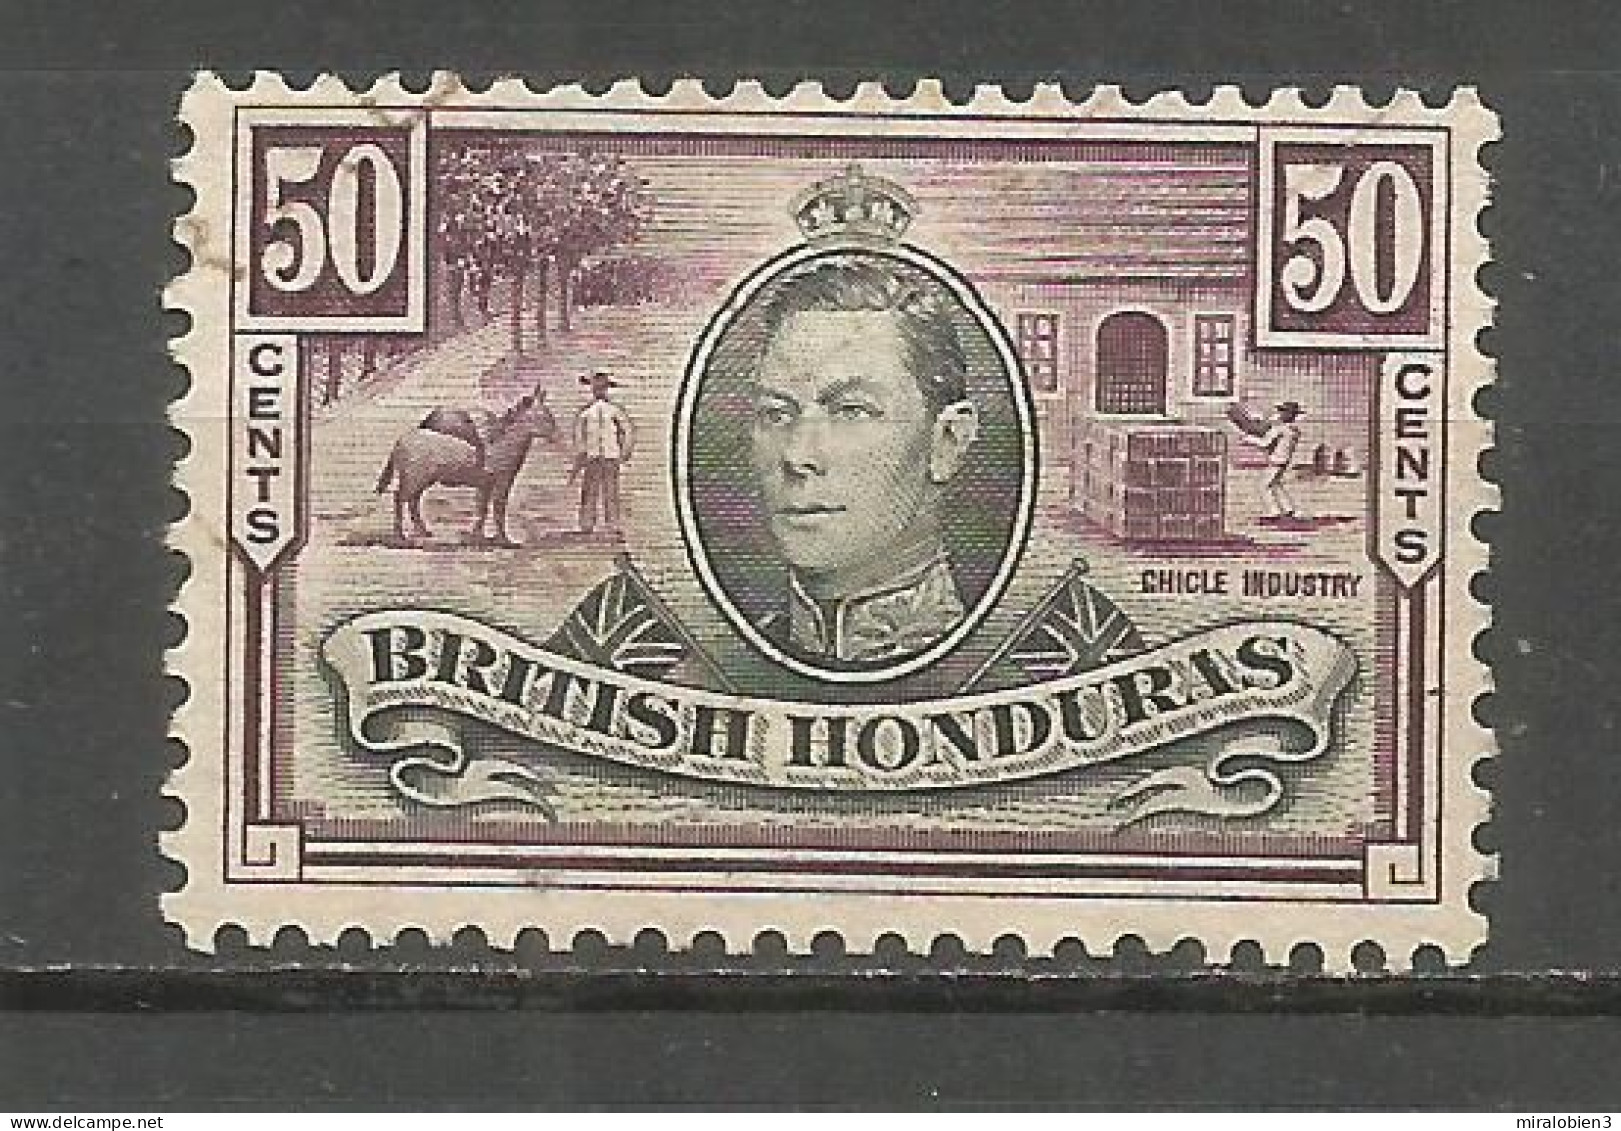 HONDURAS BRITANICA YVERT NUM. 126 USADO - Honduras Británica (...-1970)